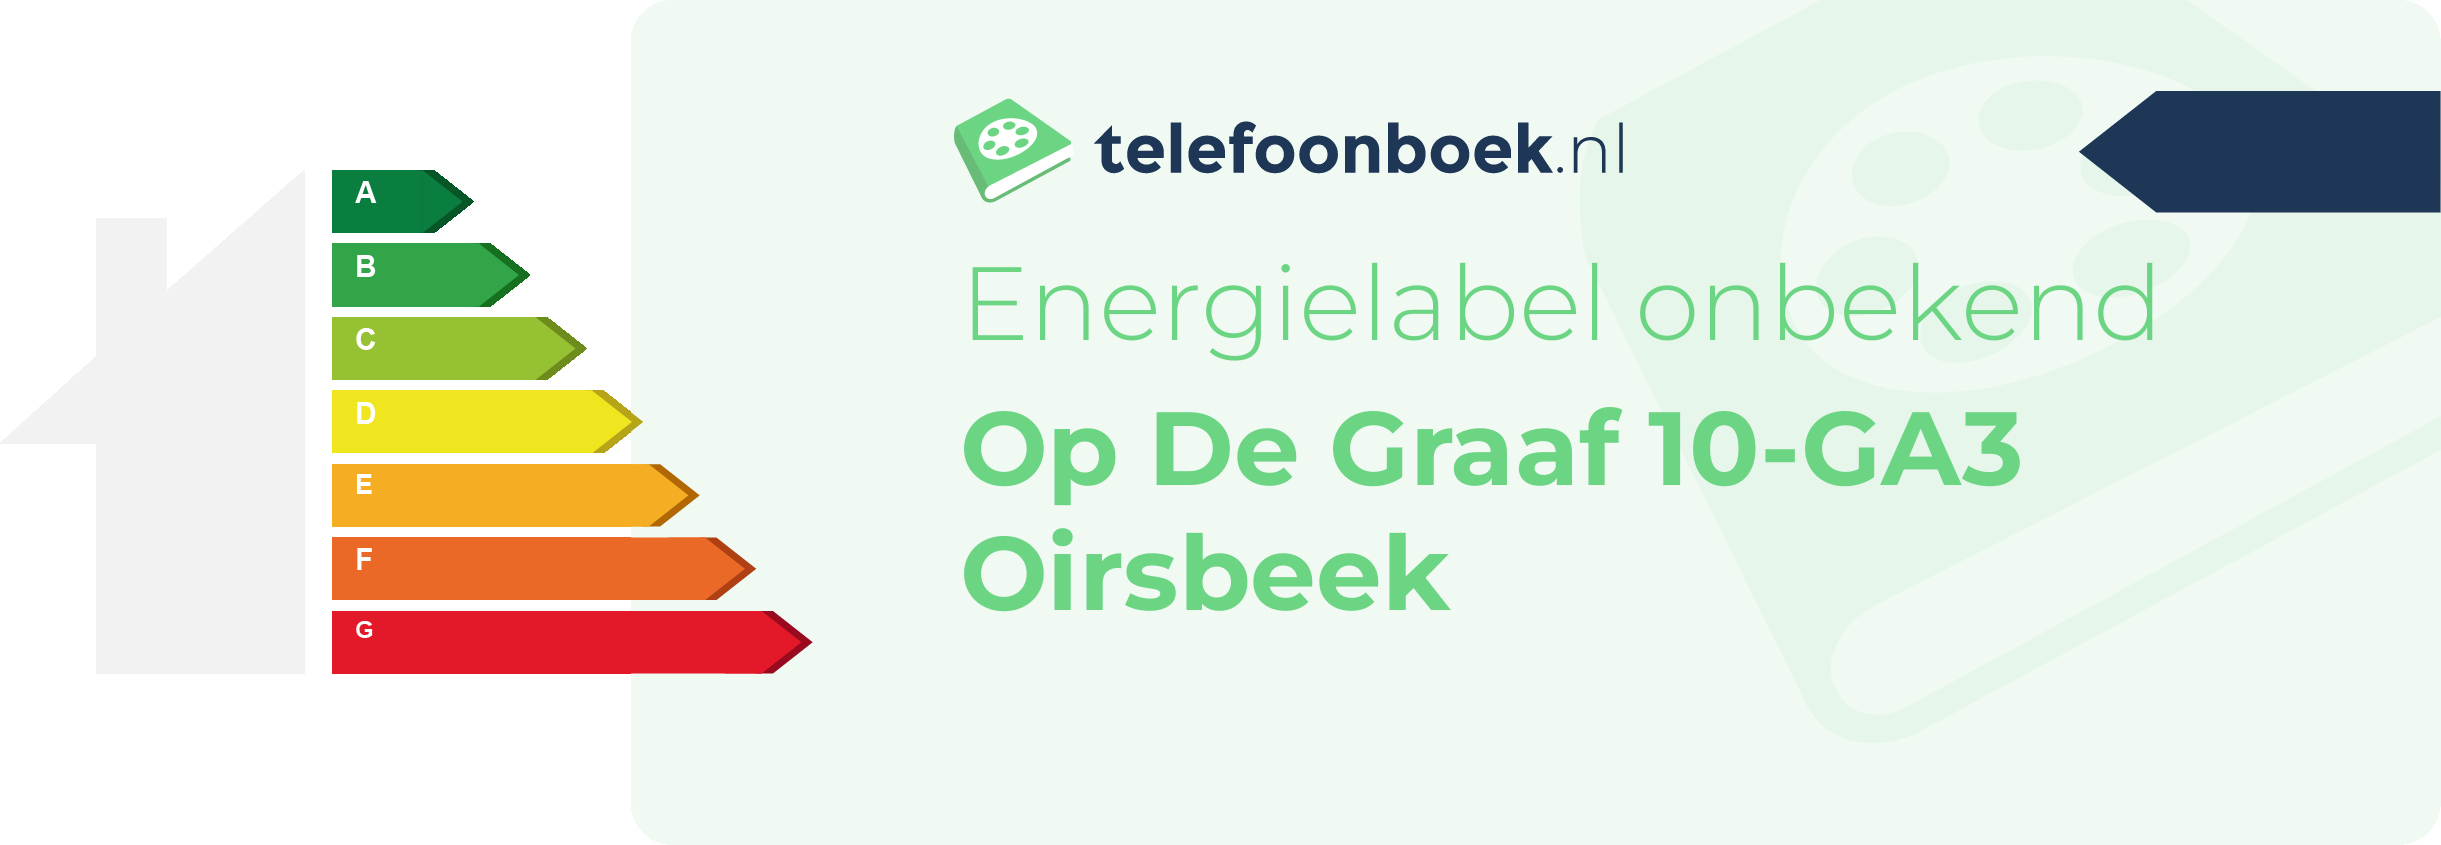 Energielabel Op De Graaf 10-GA3 Oirsbeek